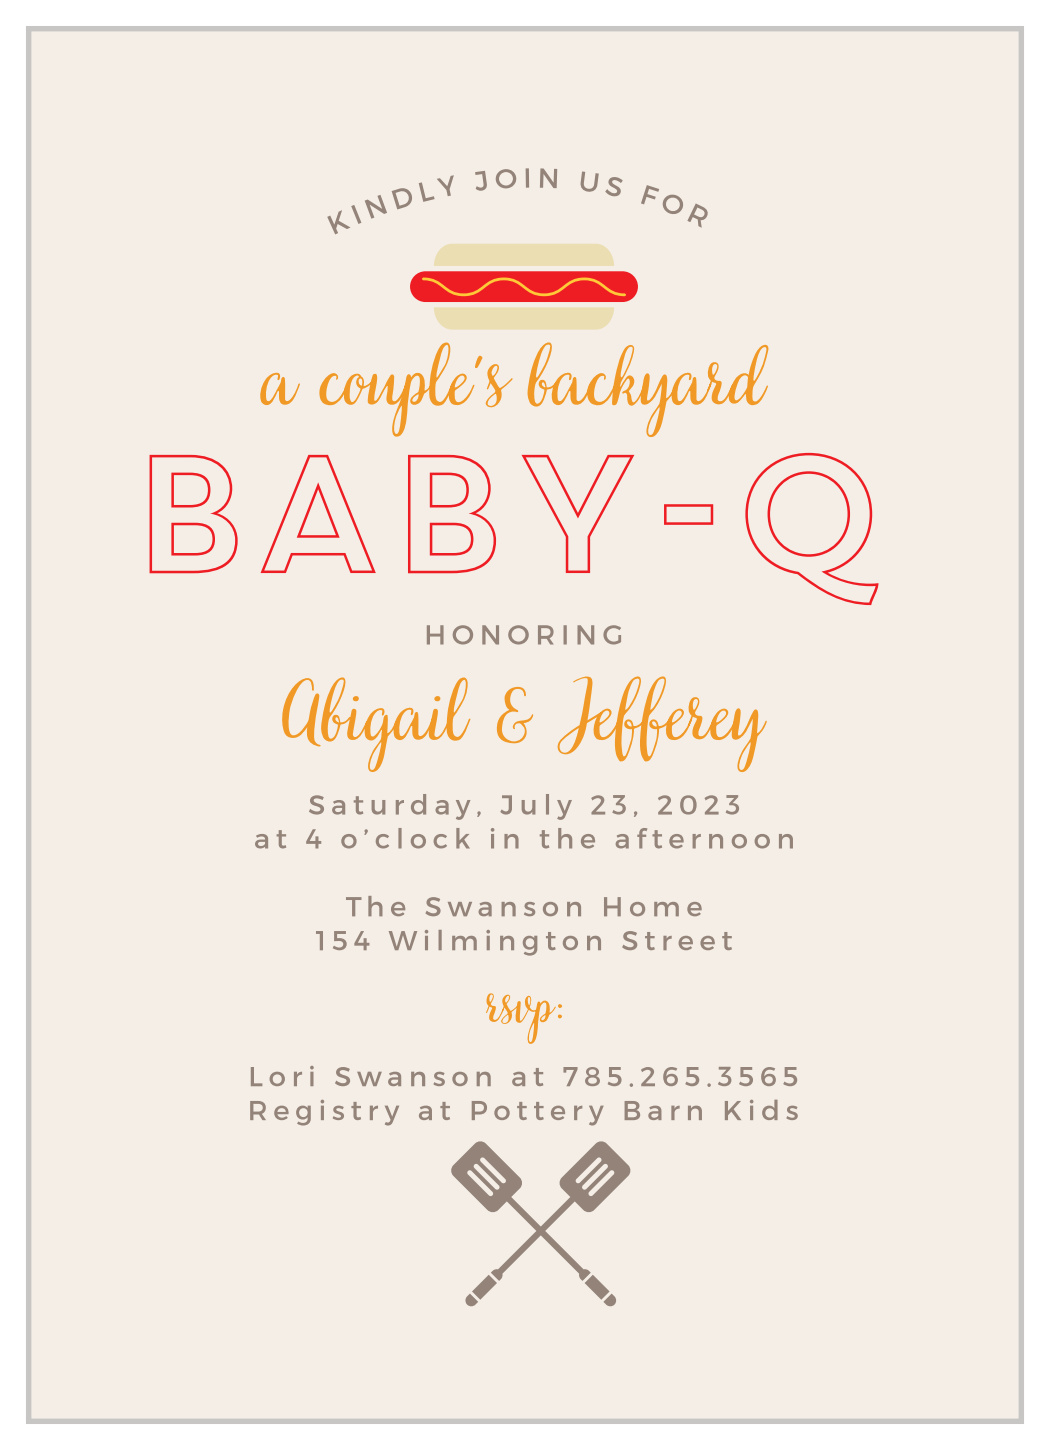 Baby-Q Baby Shower Invitations